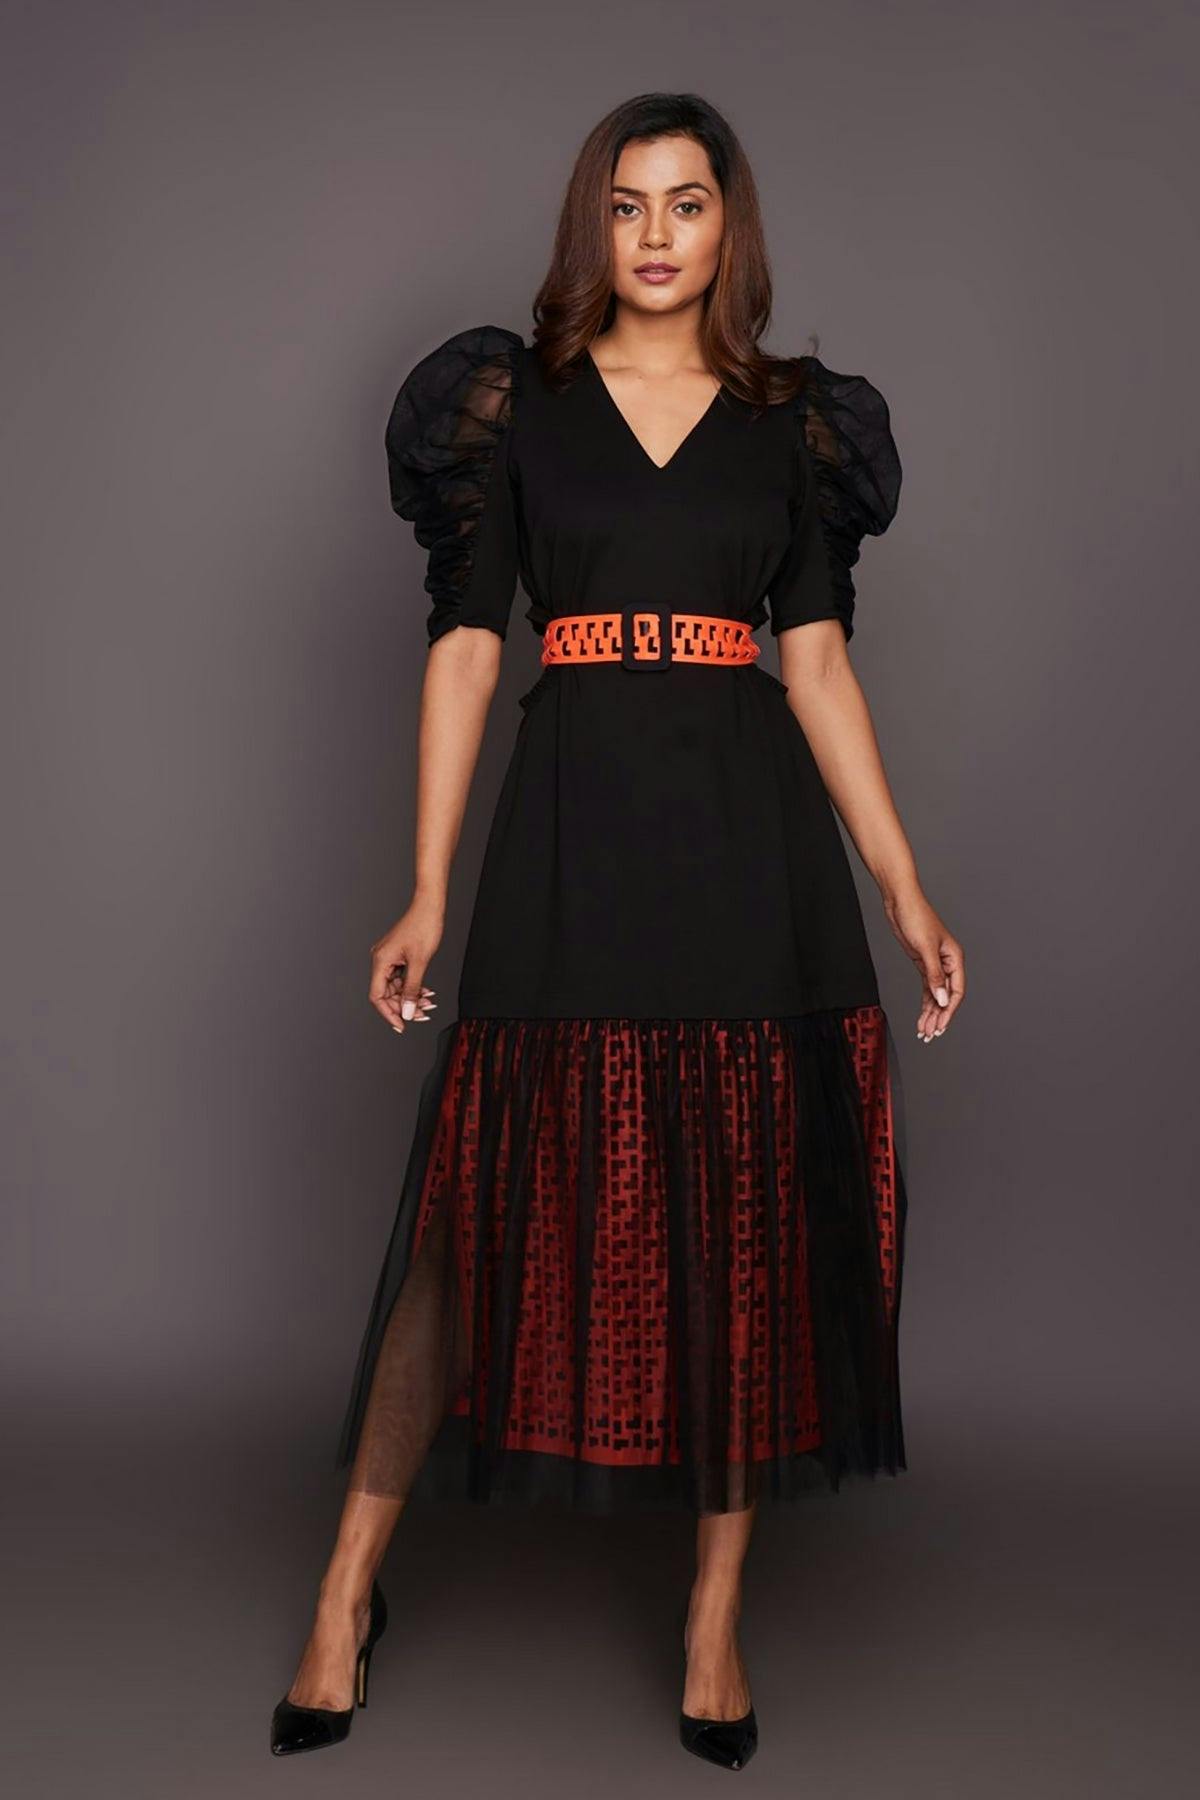  F2-1101-ORANGE - Black Neon Bottom Cutwork Dress With Belt, a product by Deepika Arora